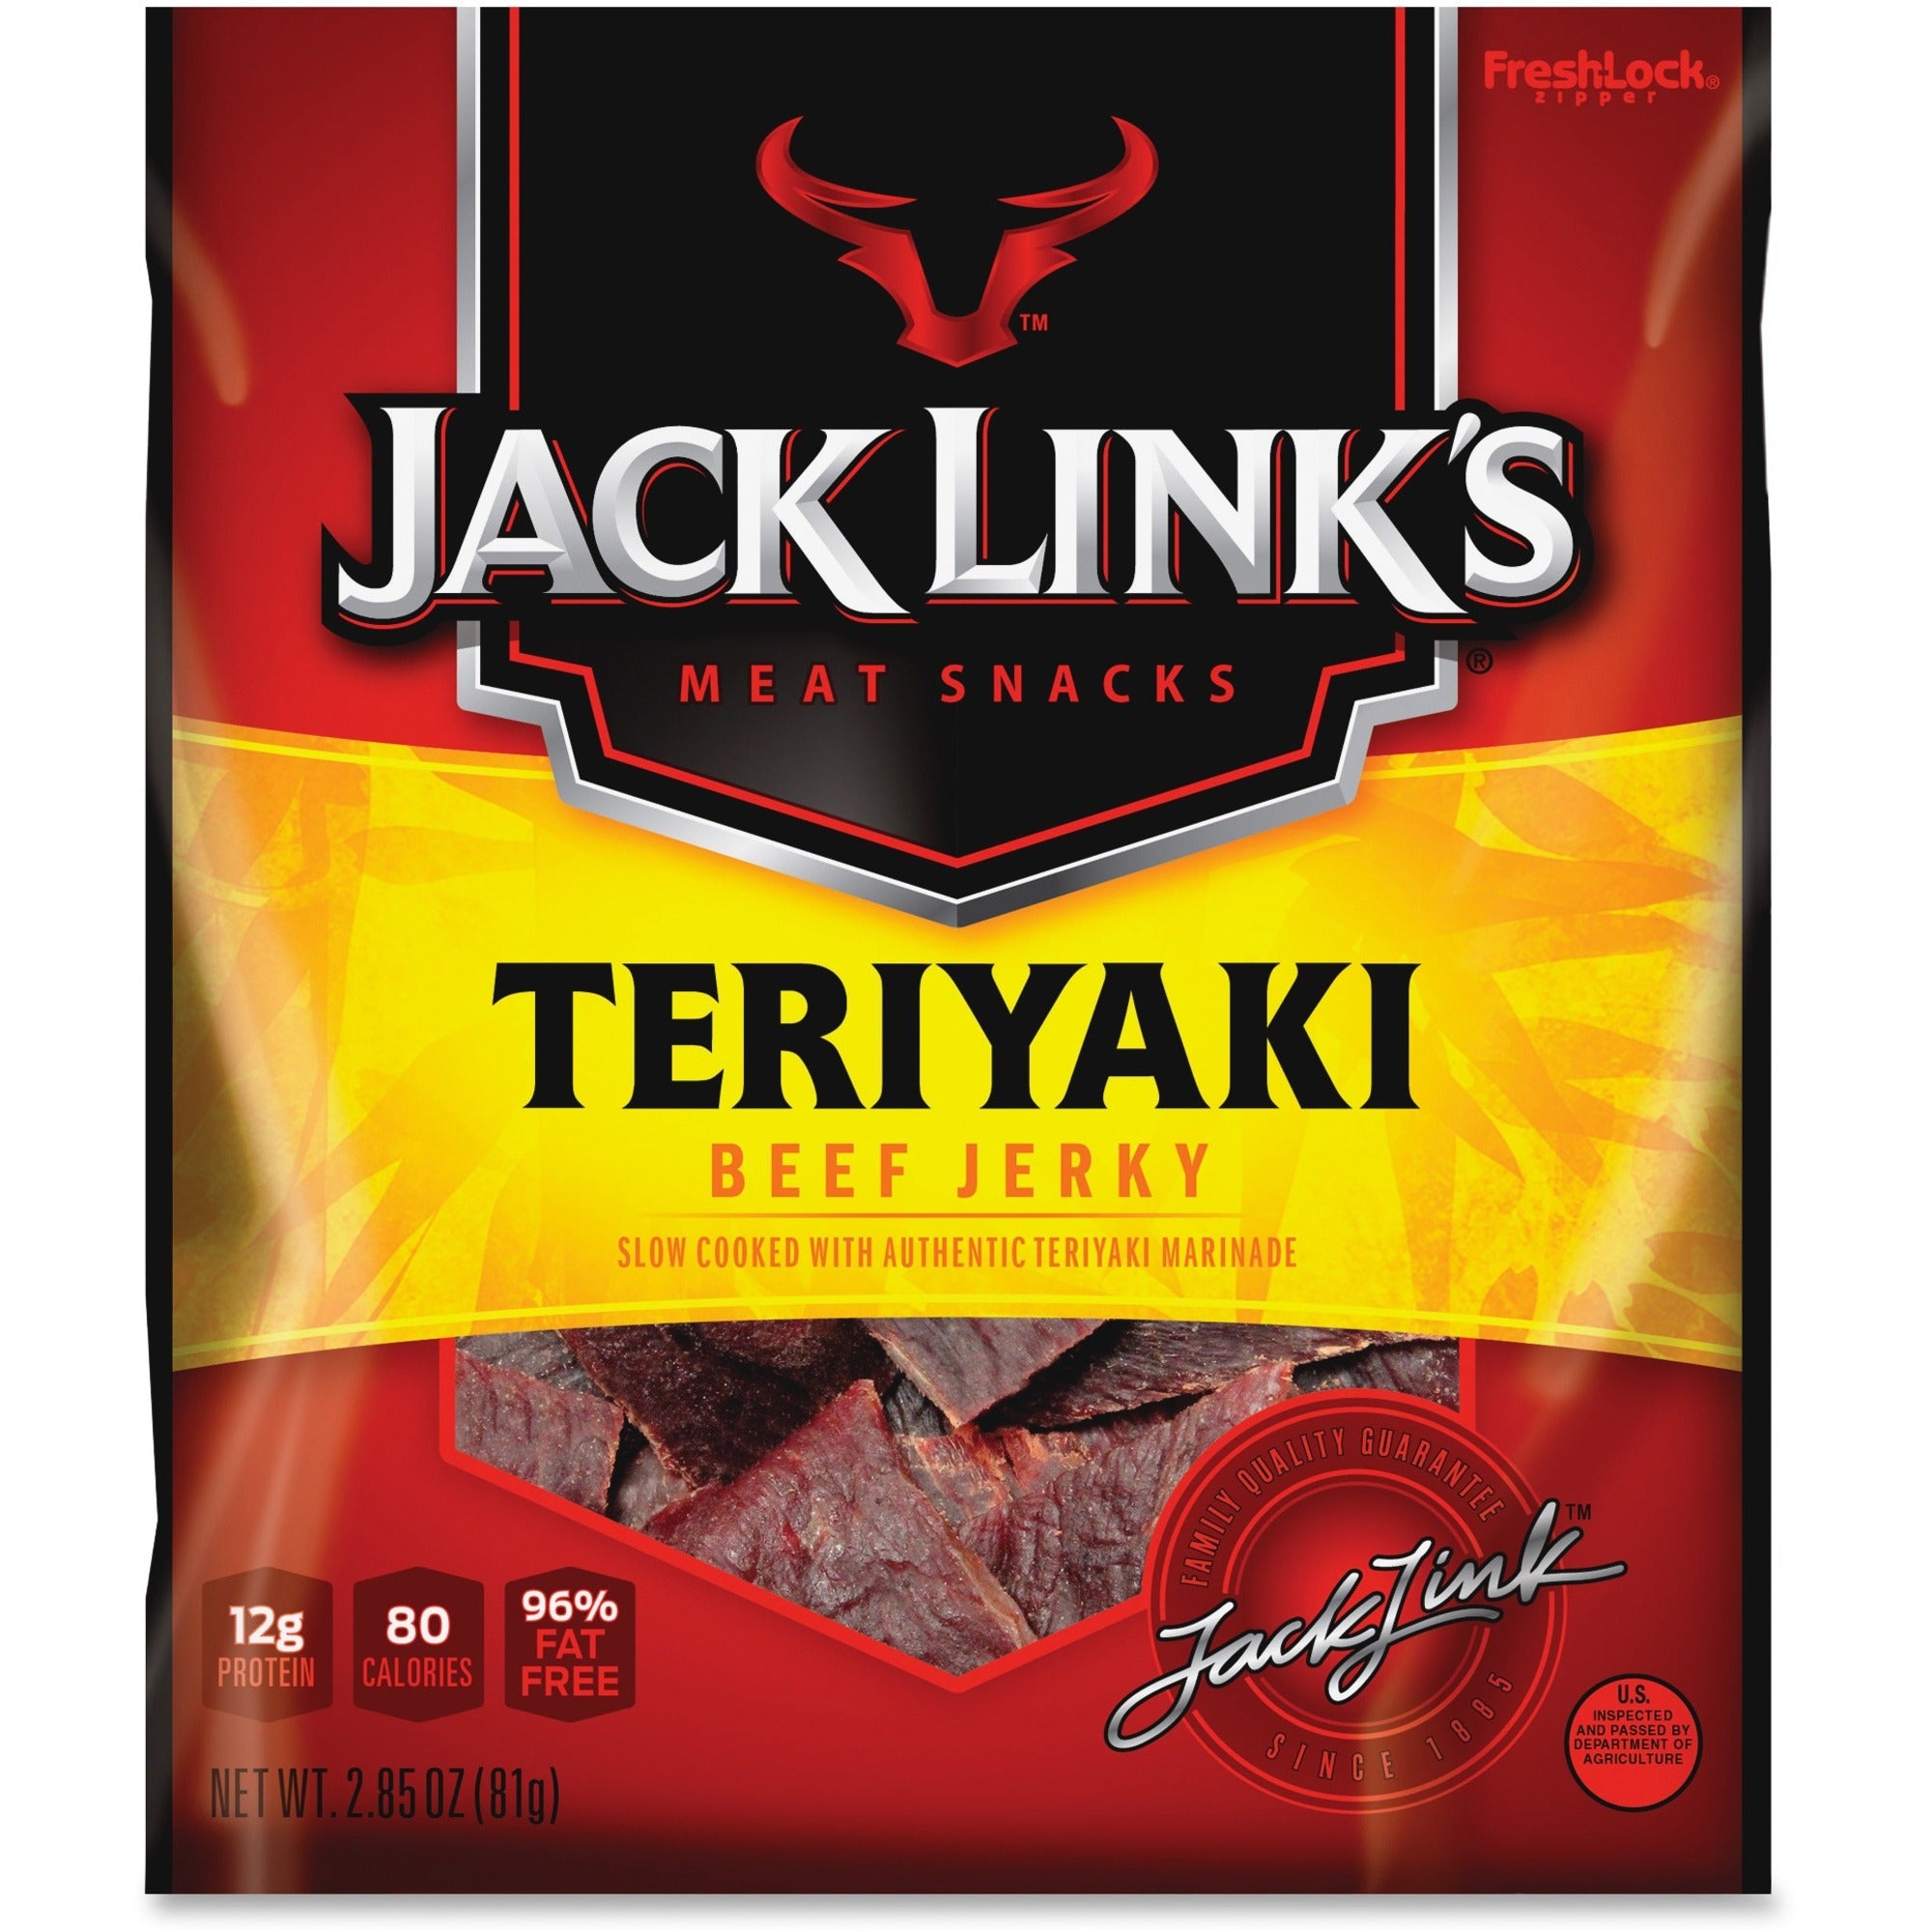 jack-links-teryiaki-beef-jerky-snacks-teriyaki-285-oz-1-bag_jck87635 - 1